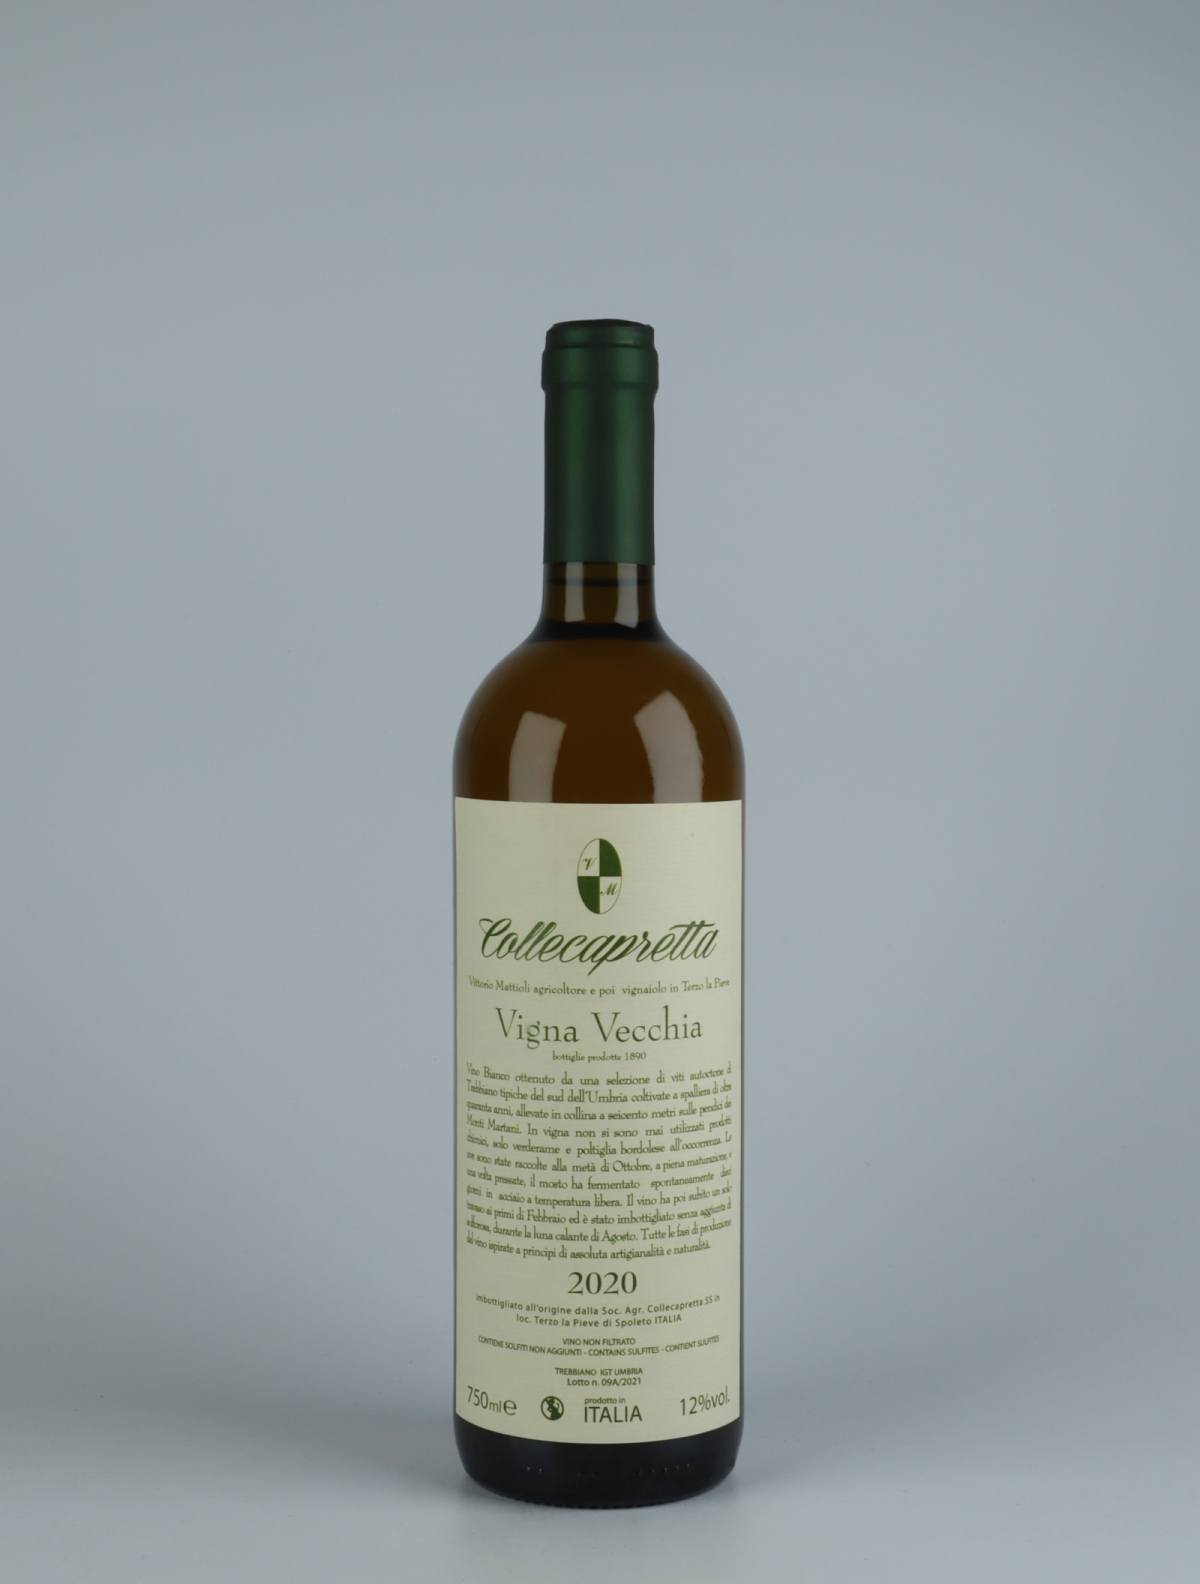 En flaske 2020 Vigna Vecchia Orange vin fra Collecapretta, Umbrien i Italien